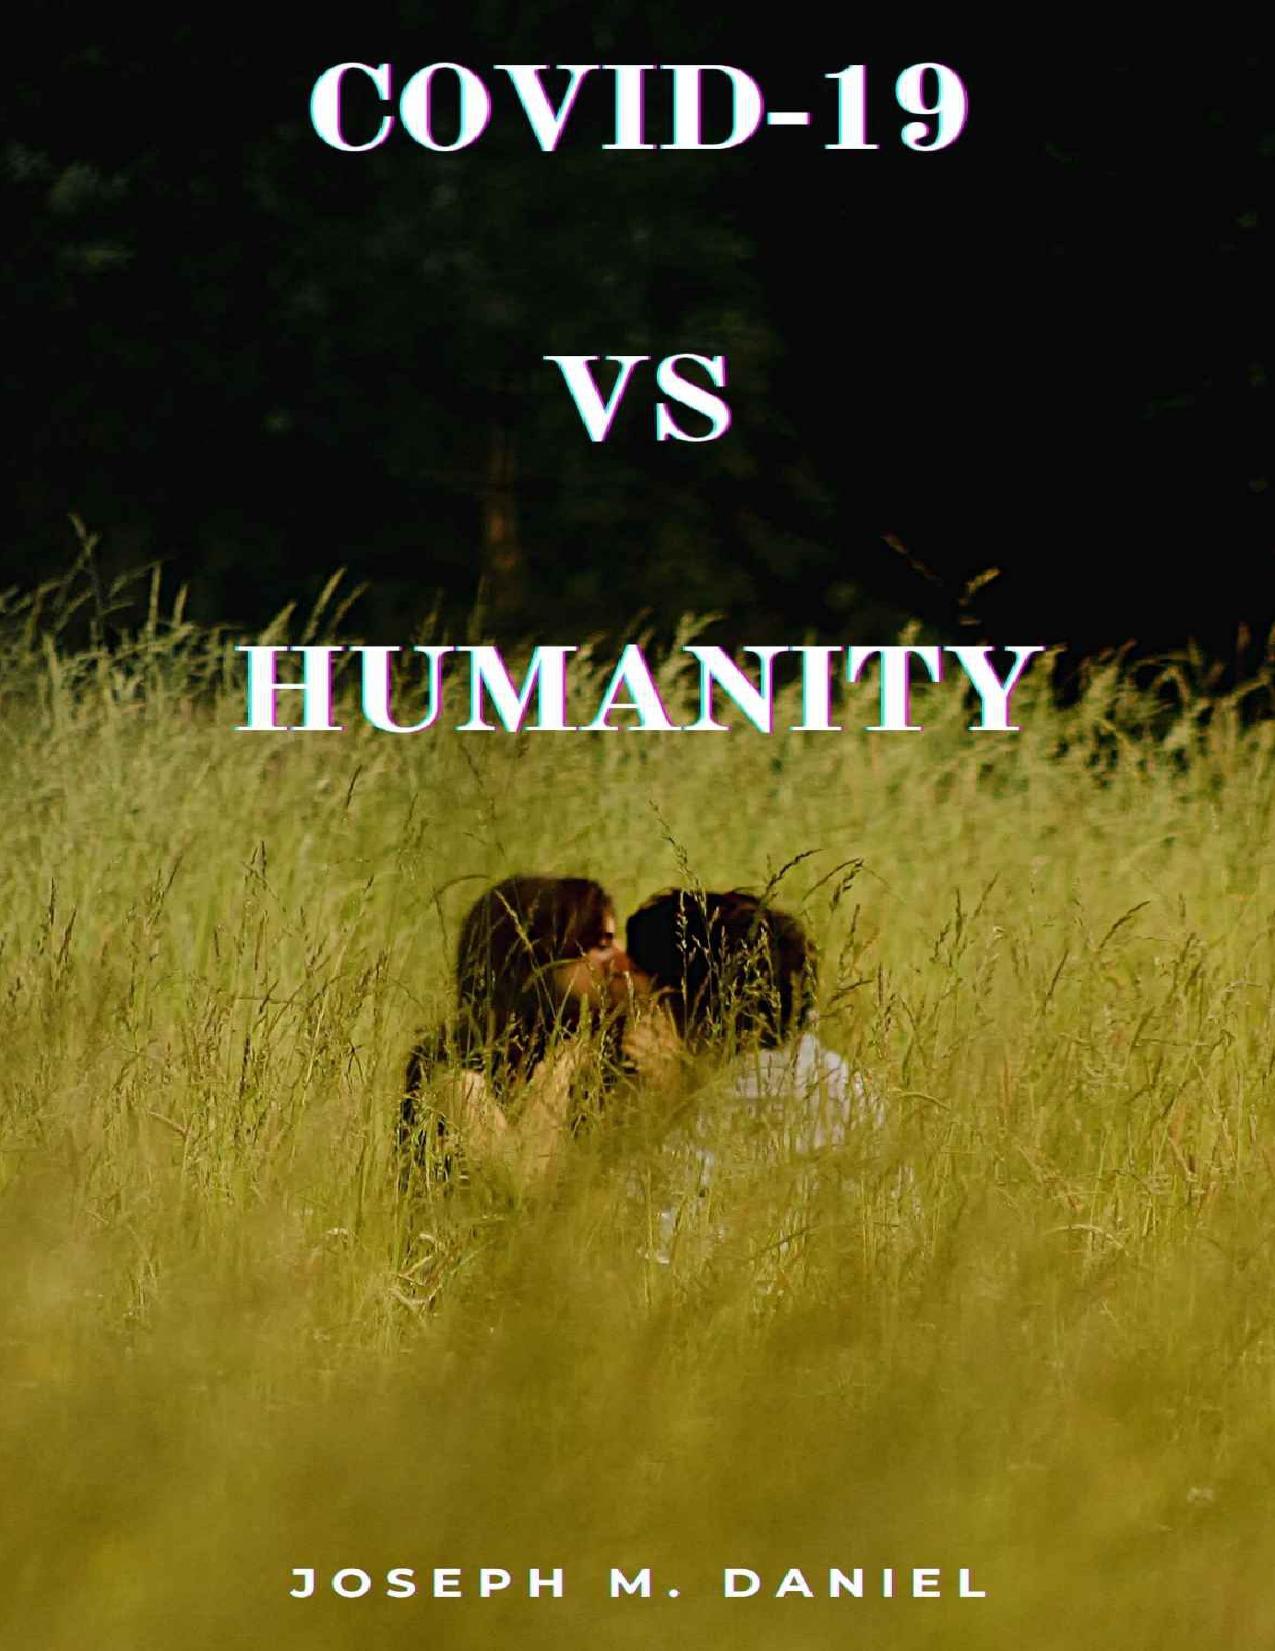 COVID-19 VS HUMANITY by JOSEPH M. DANIEL